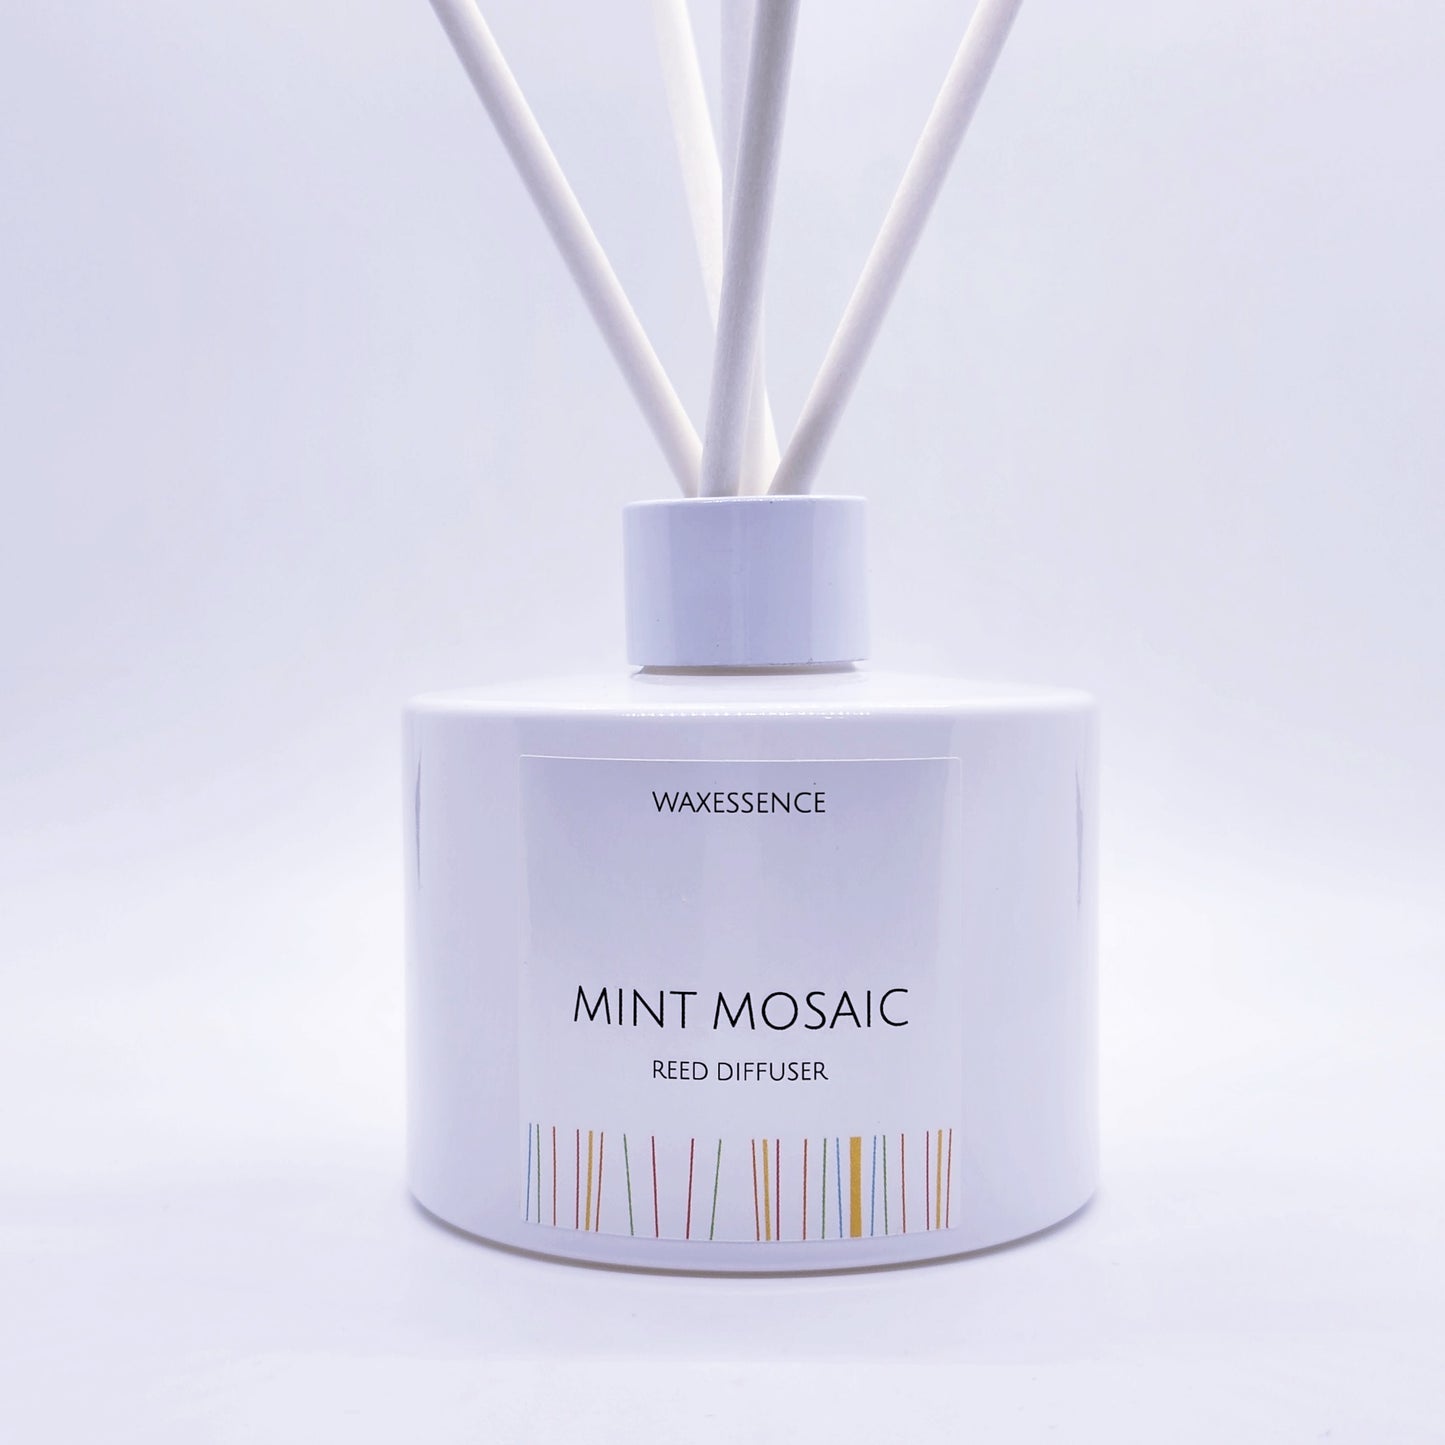 Mint Mosaic Reed Diffuser | Essenza Gloss White  | Aromatherapy Home Decor | Diffuser Oil | 6.8 fl. oz